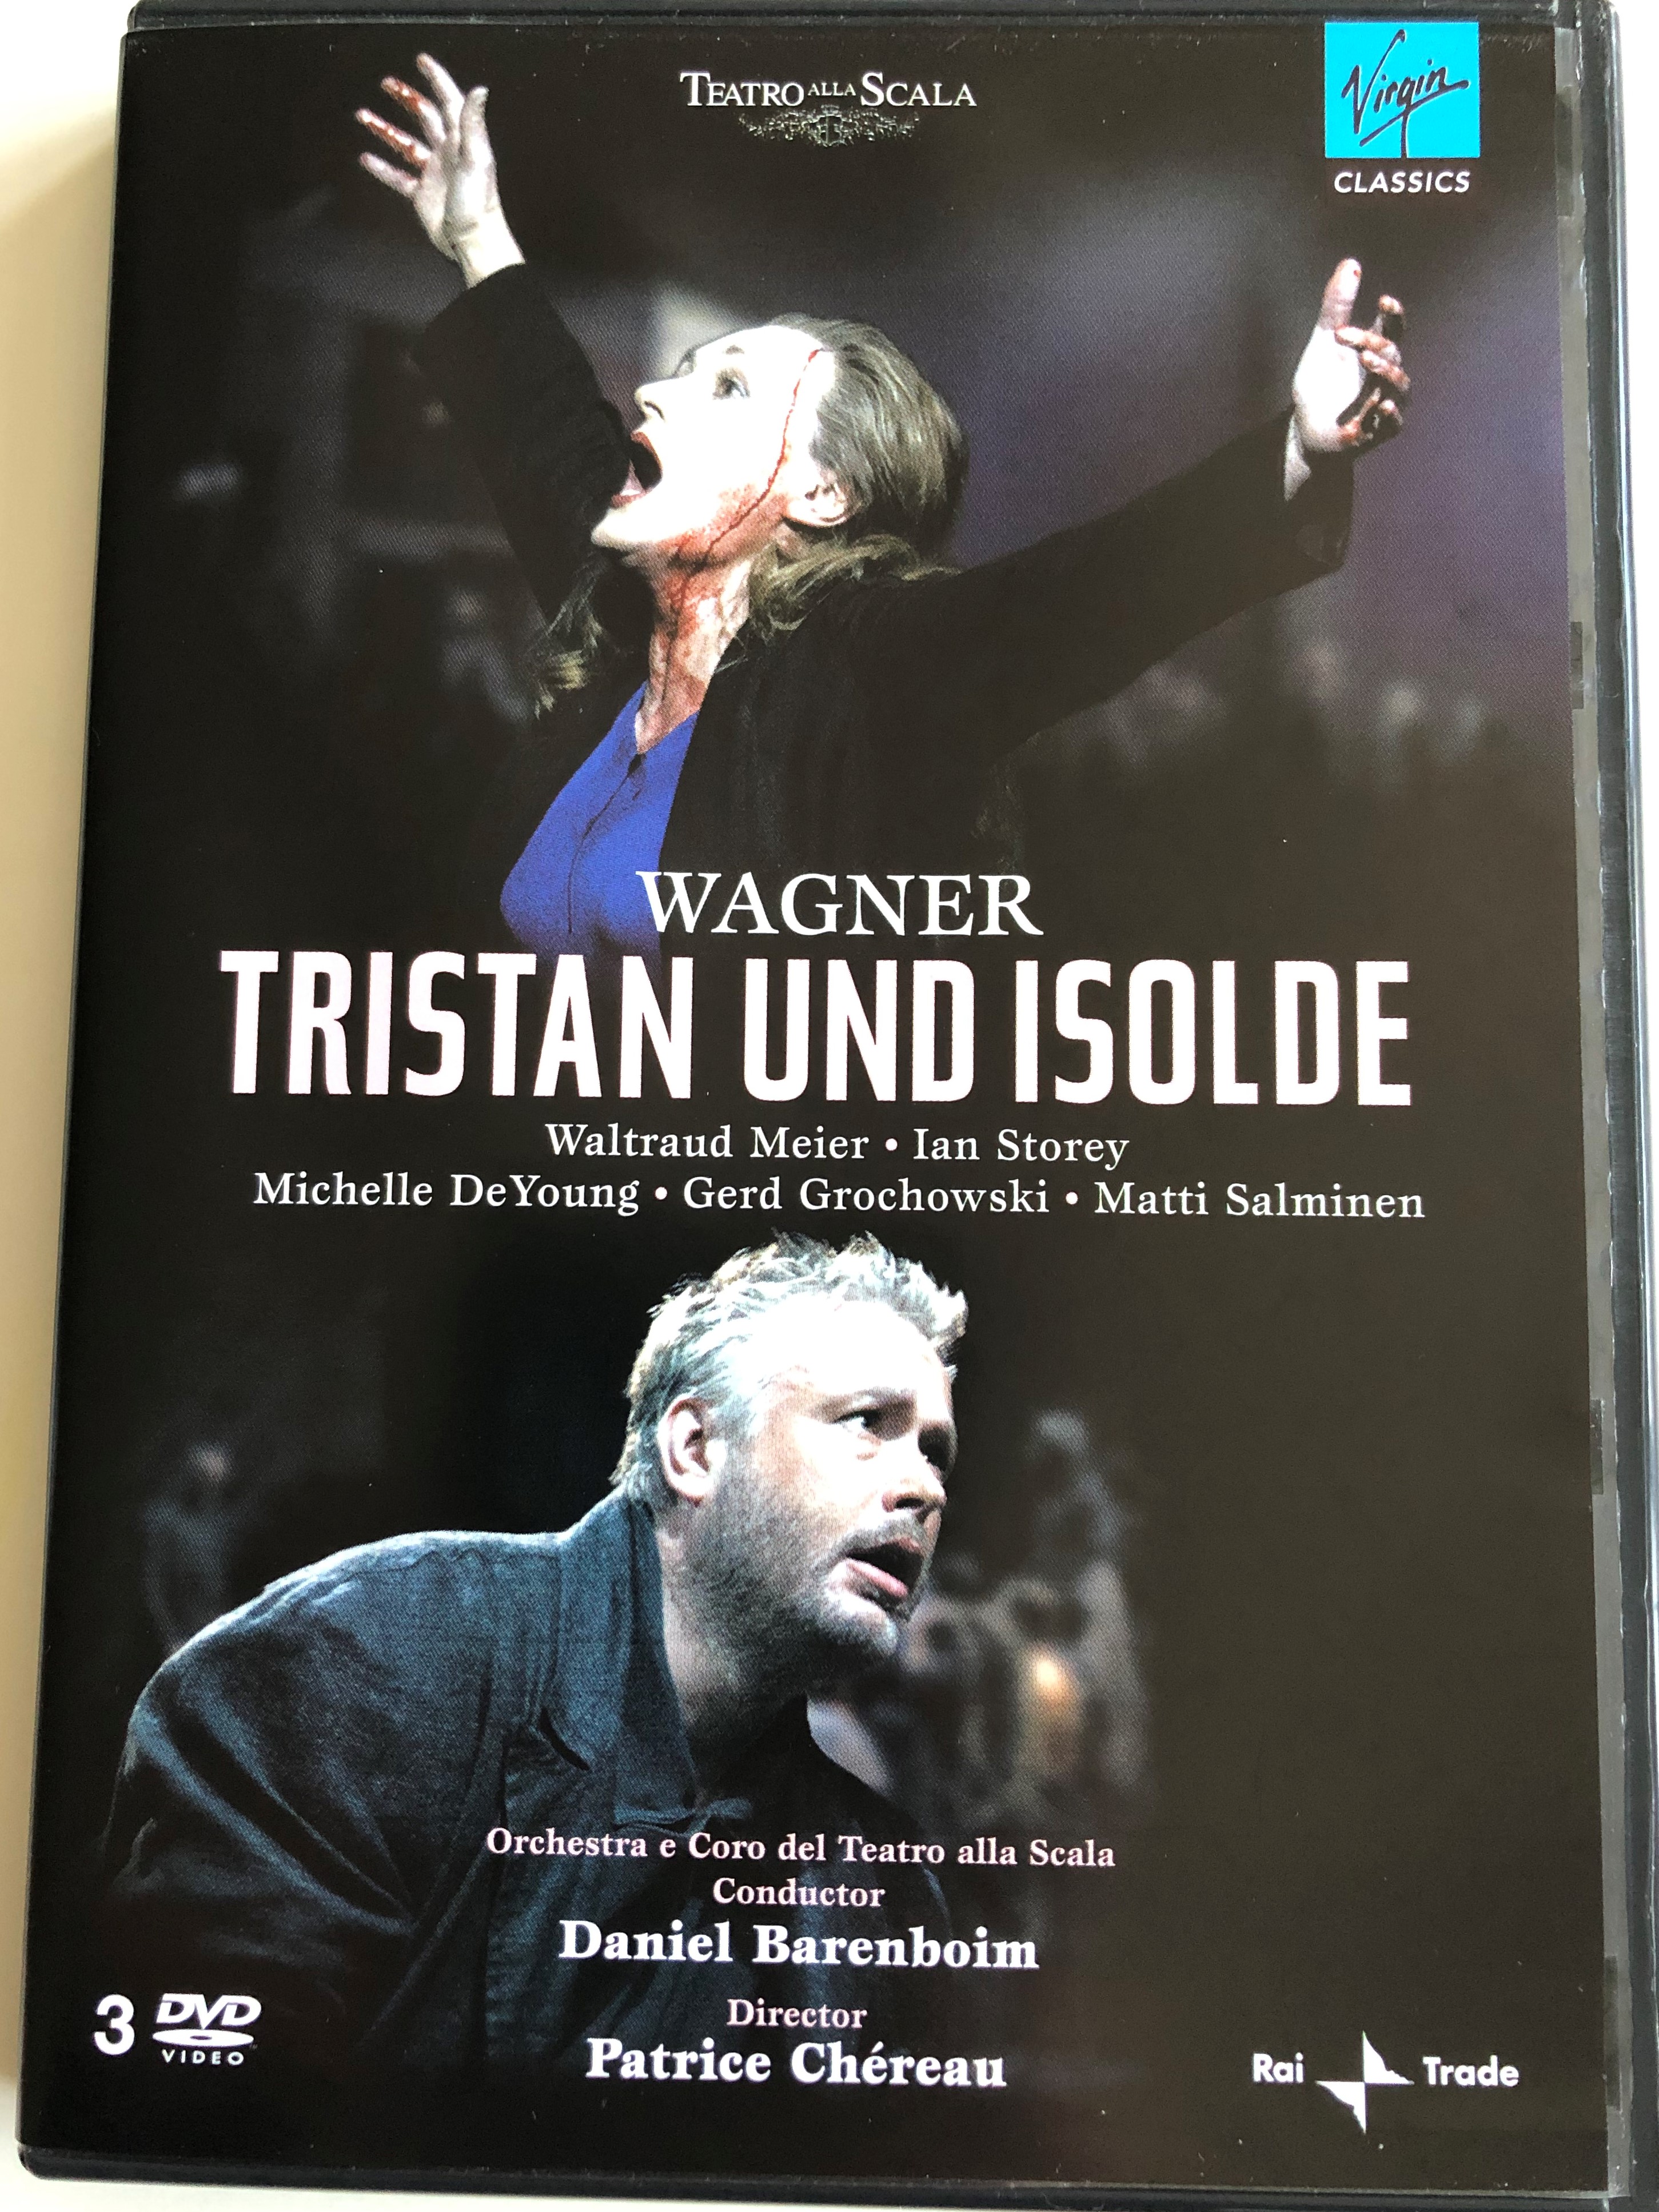 Wagner - Tristan und Isolde DVD 2008 / Orchestra e Coro del Teatro alla  Scala / Conducted by Daniel Barenboim / Directed by Patrice Chéreau / 3 DVD  - bibleinmylanguage